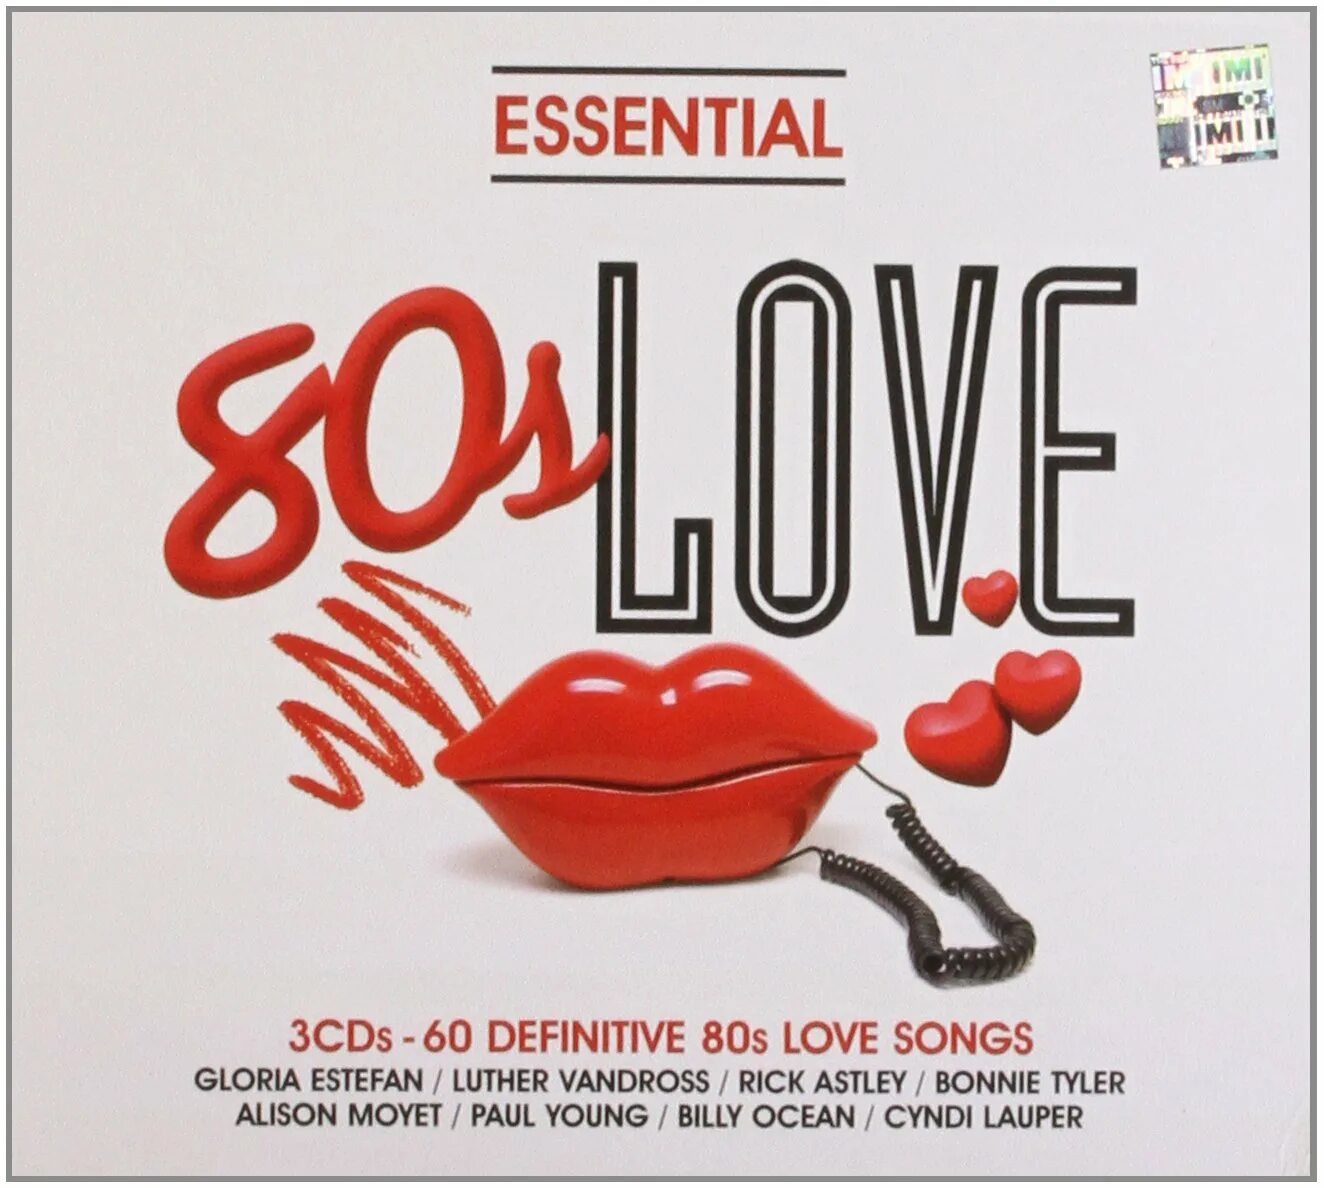 80 Essential. Альбом Essential 80s. Essential 80s tracks альбом. Various artists - Essential 80s (LP). Let s hear